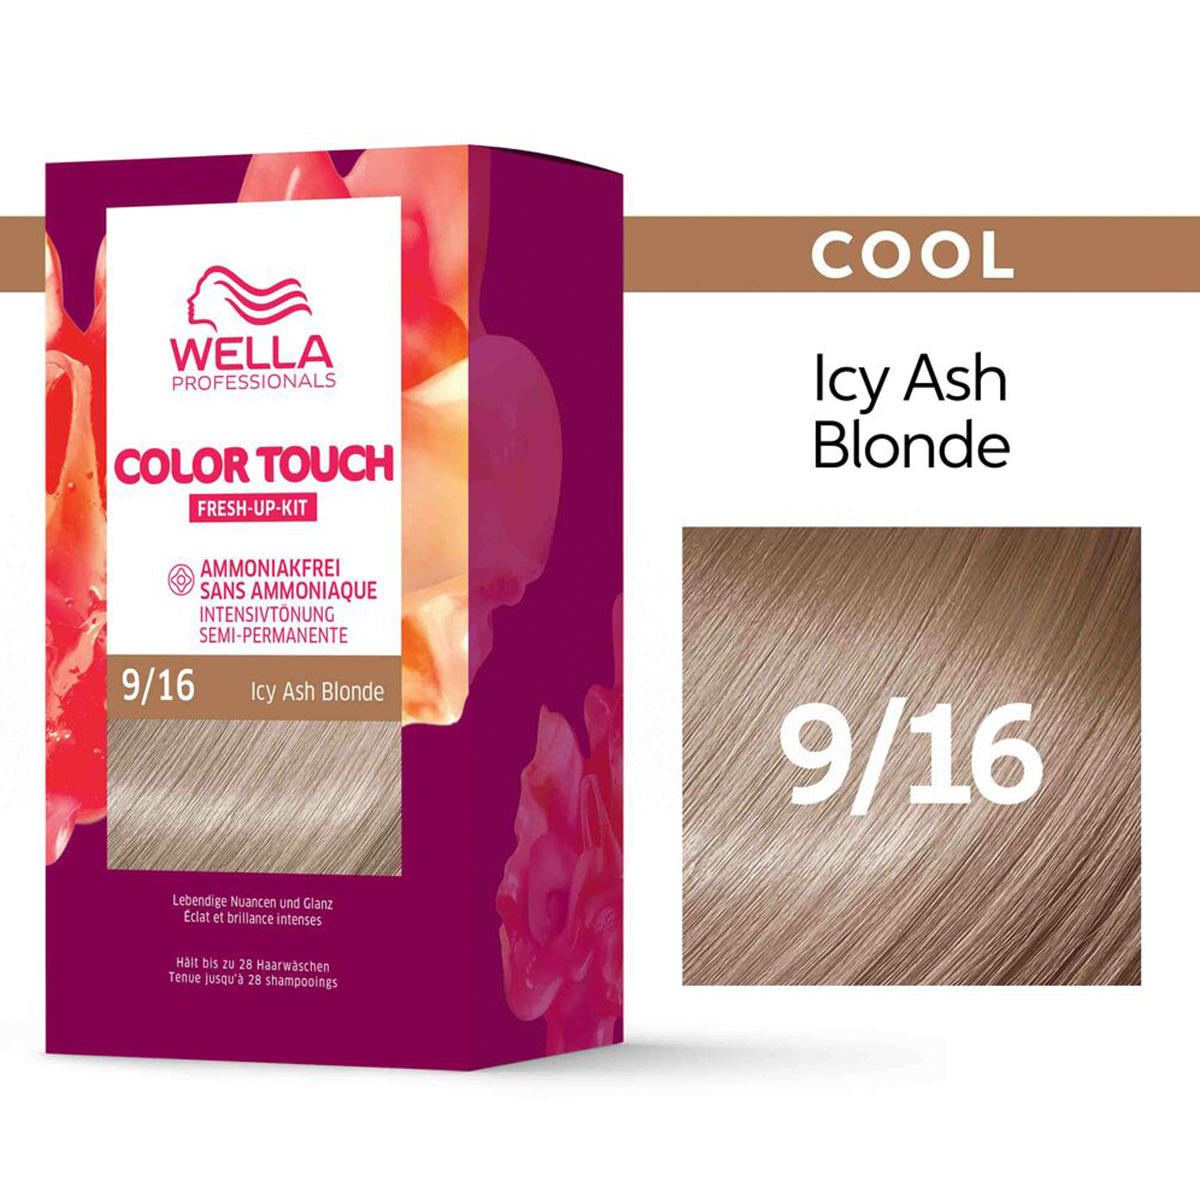 Wella Color Touch Fresh-Up-Kit 9/16 Lichtblond asviolet 130 ml - 2